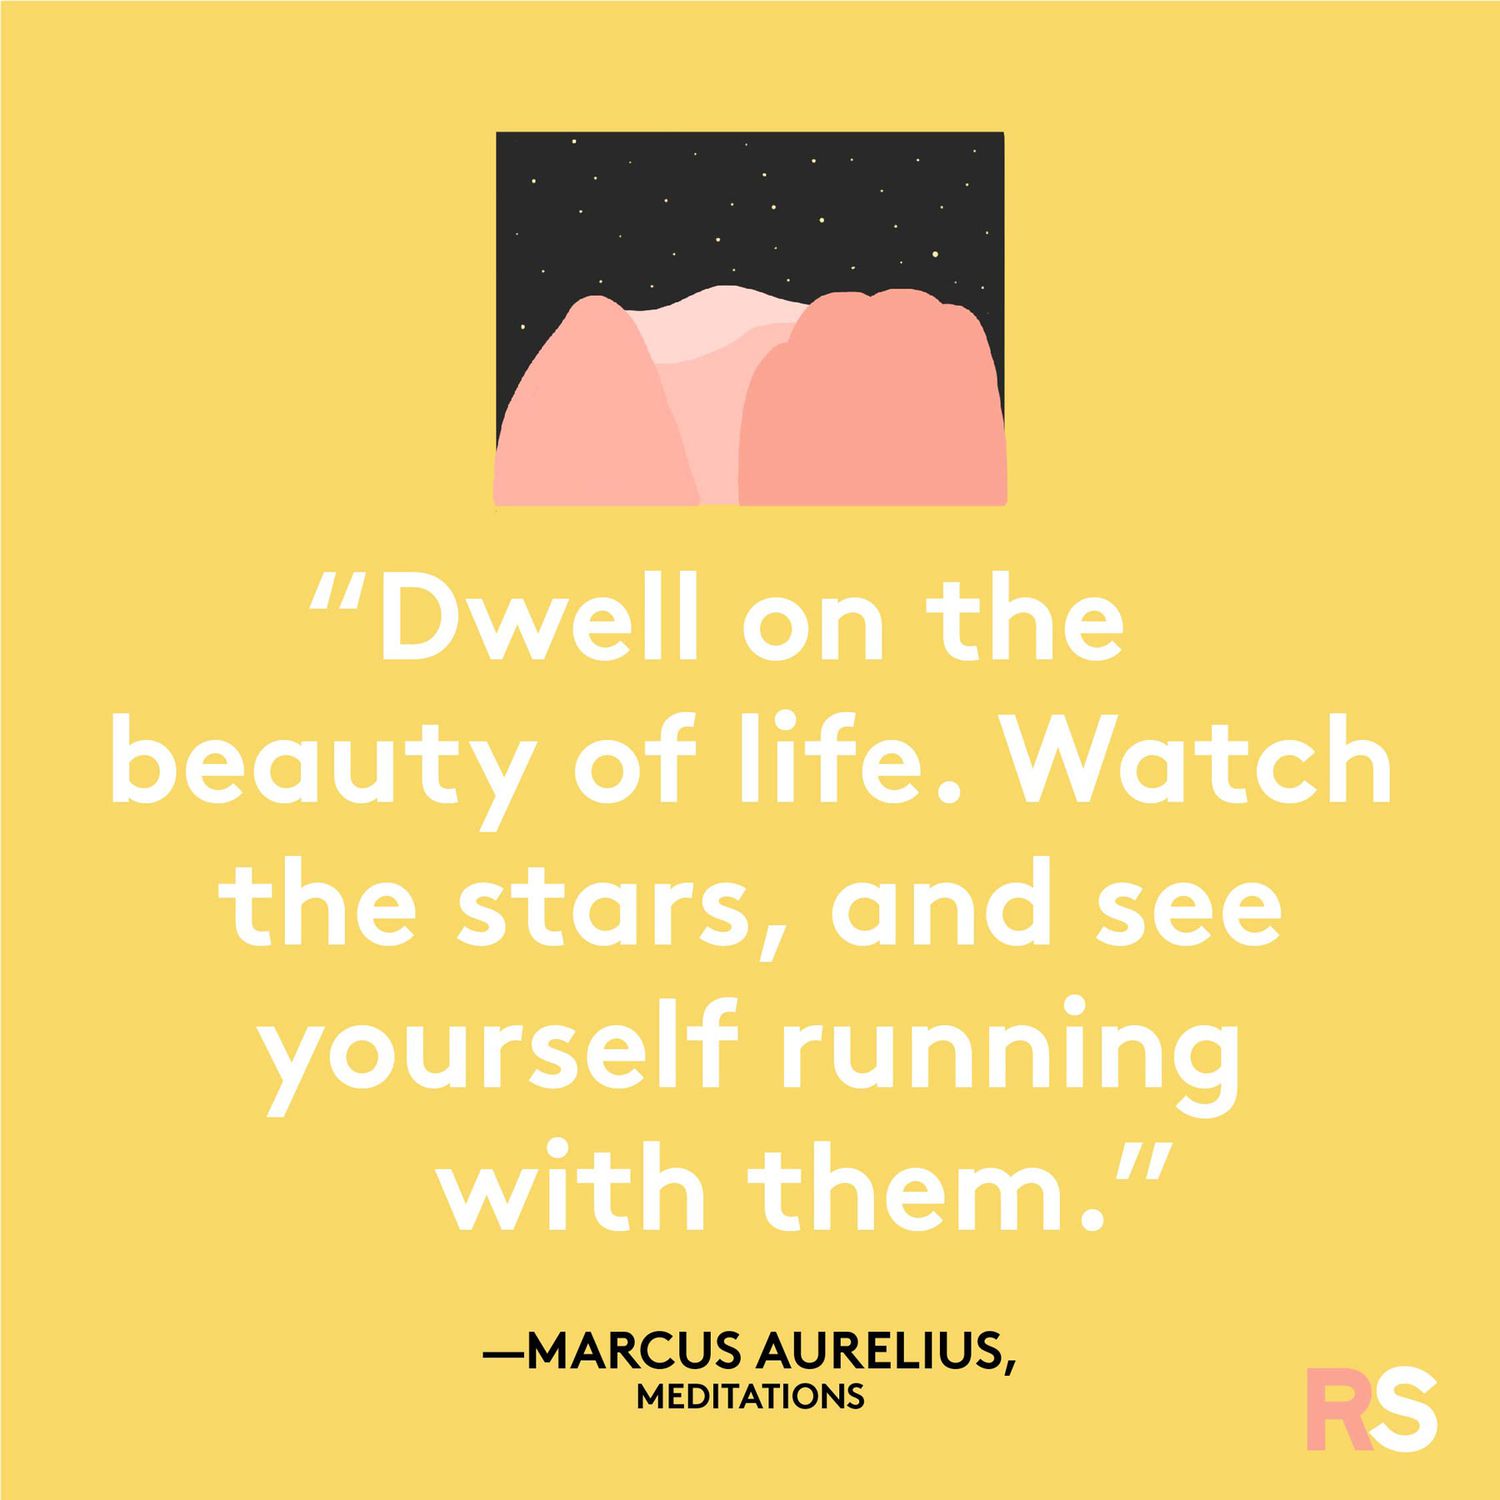 Positive motivating quotes, captions, messages – Marcus Aurelius Meditations quote